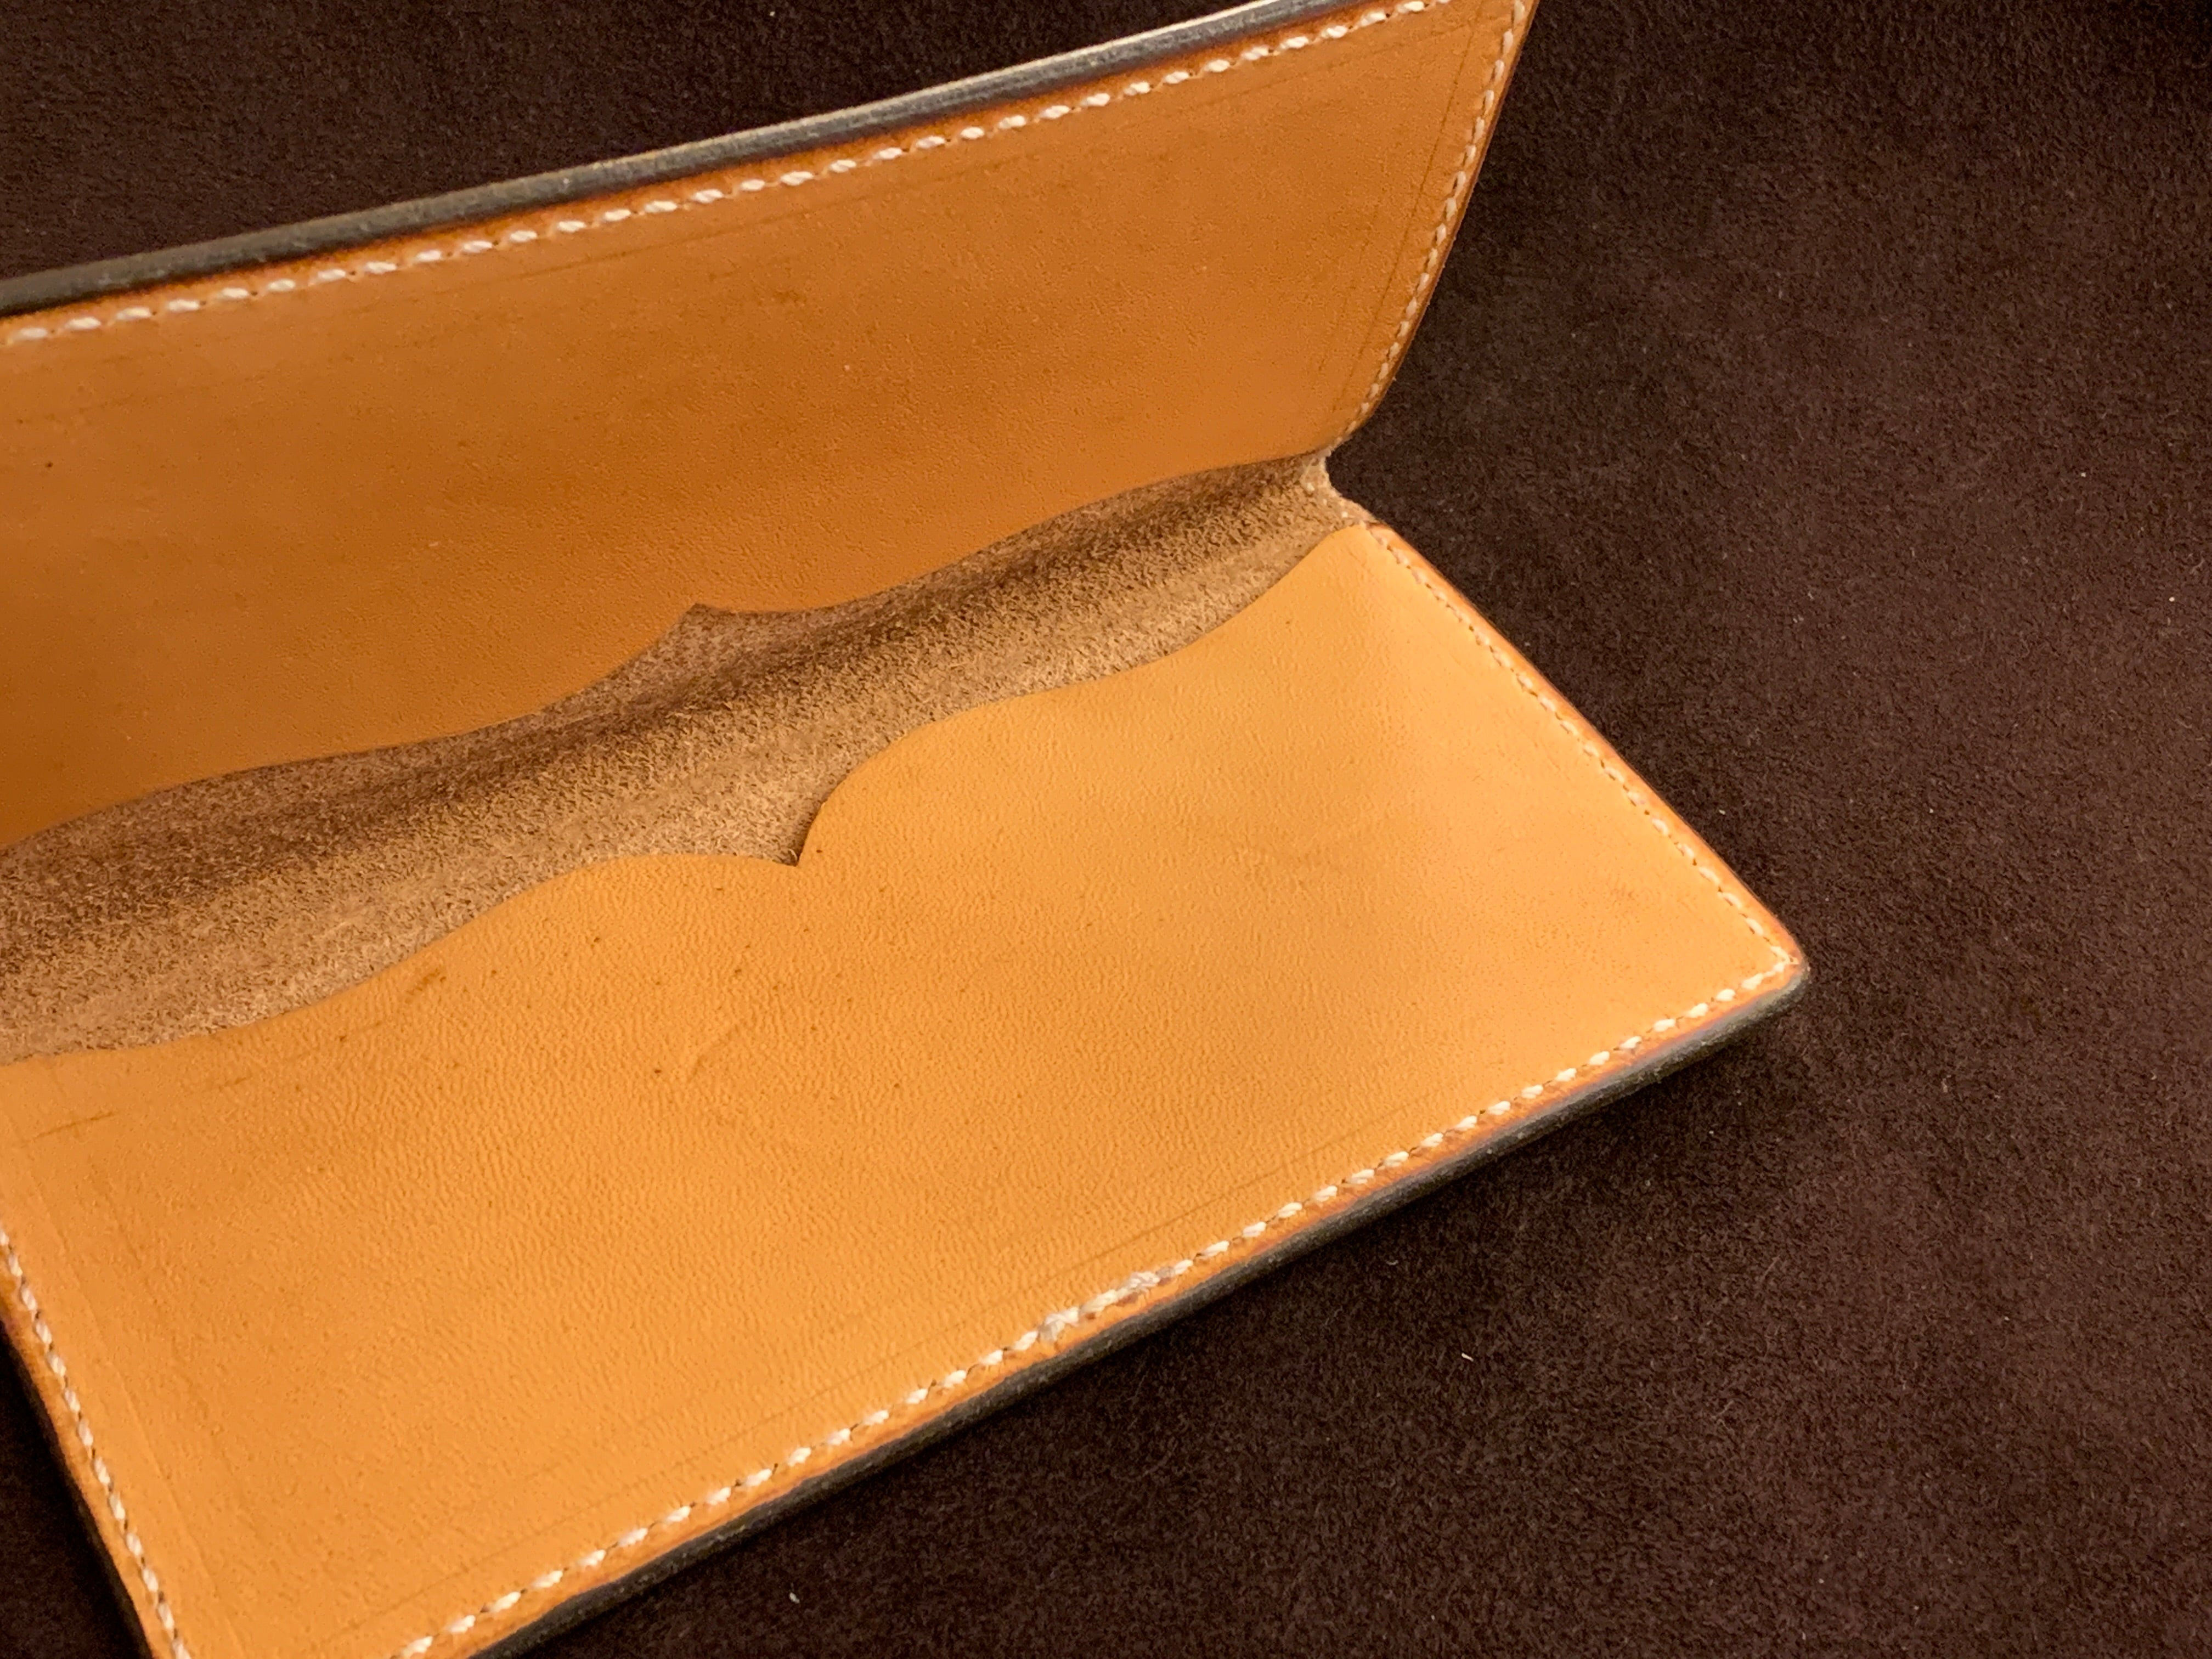 Gibson Dark Brown Antiqued Checkbook Cover Wallet Hammered Pattern